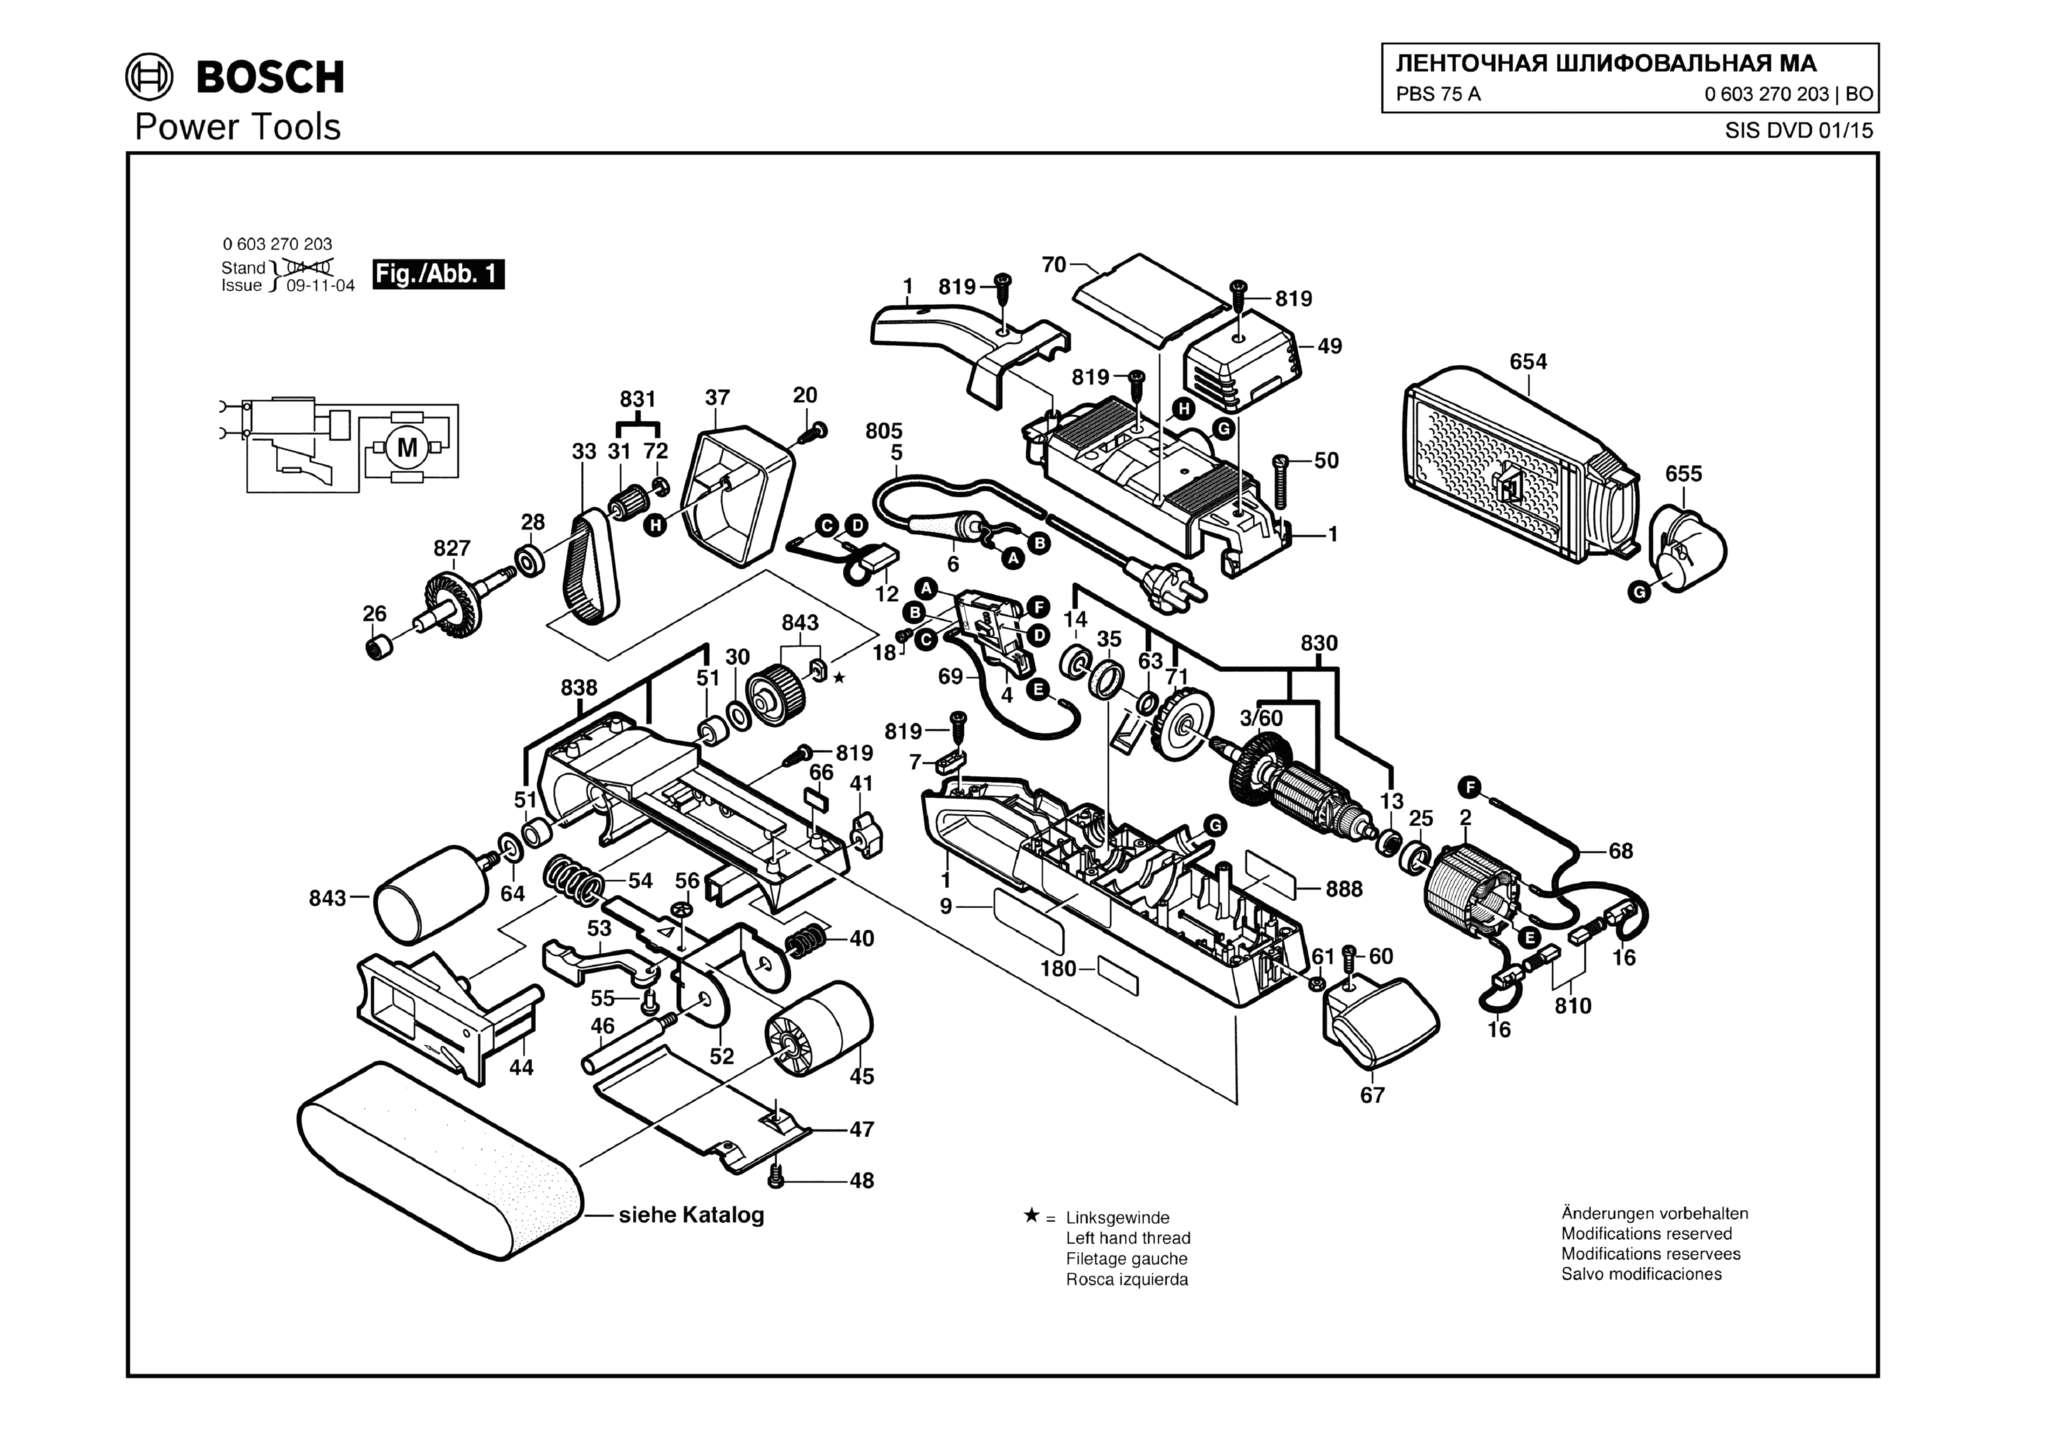 Запчасти, схема и деталировка Bosch PBS 75 A (ТИП 0603270203)